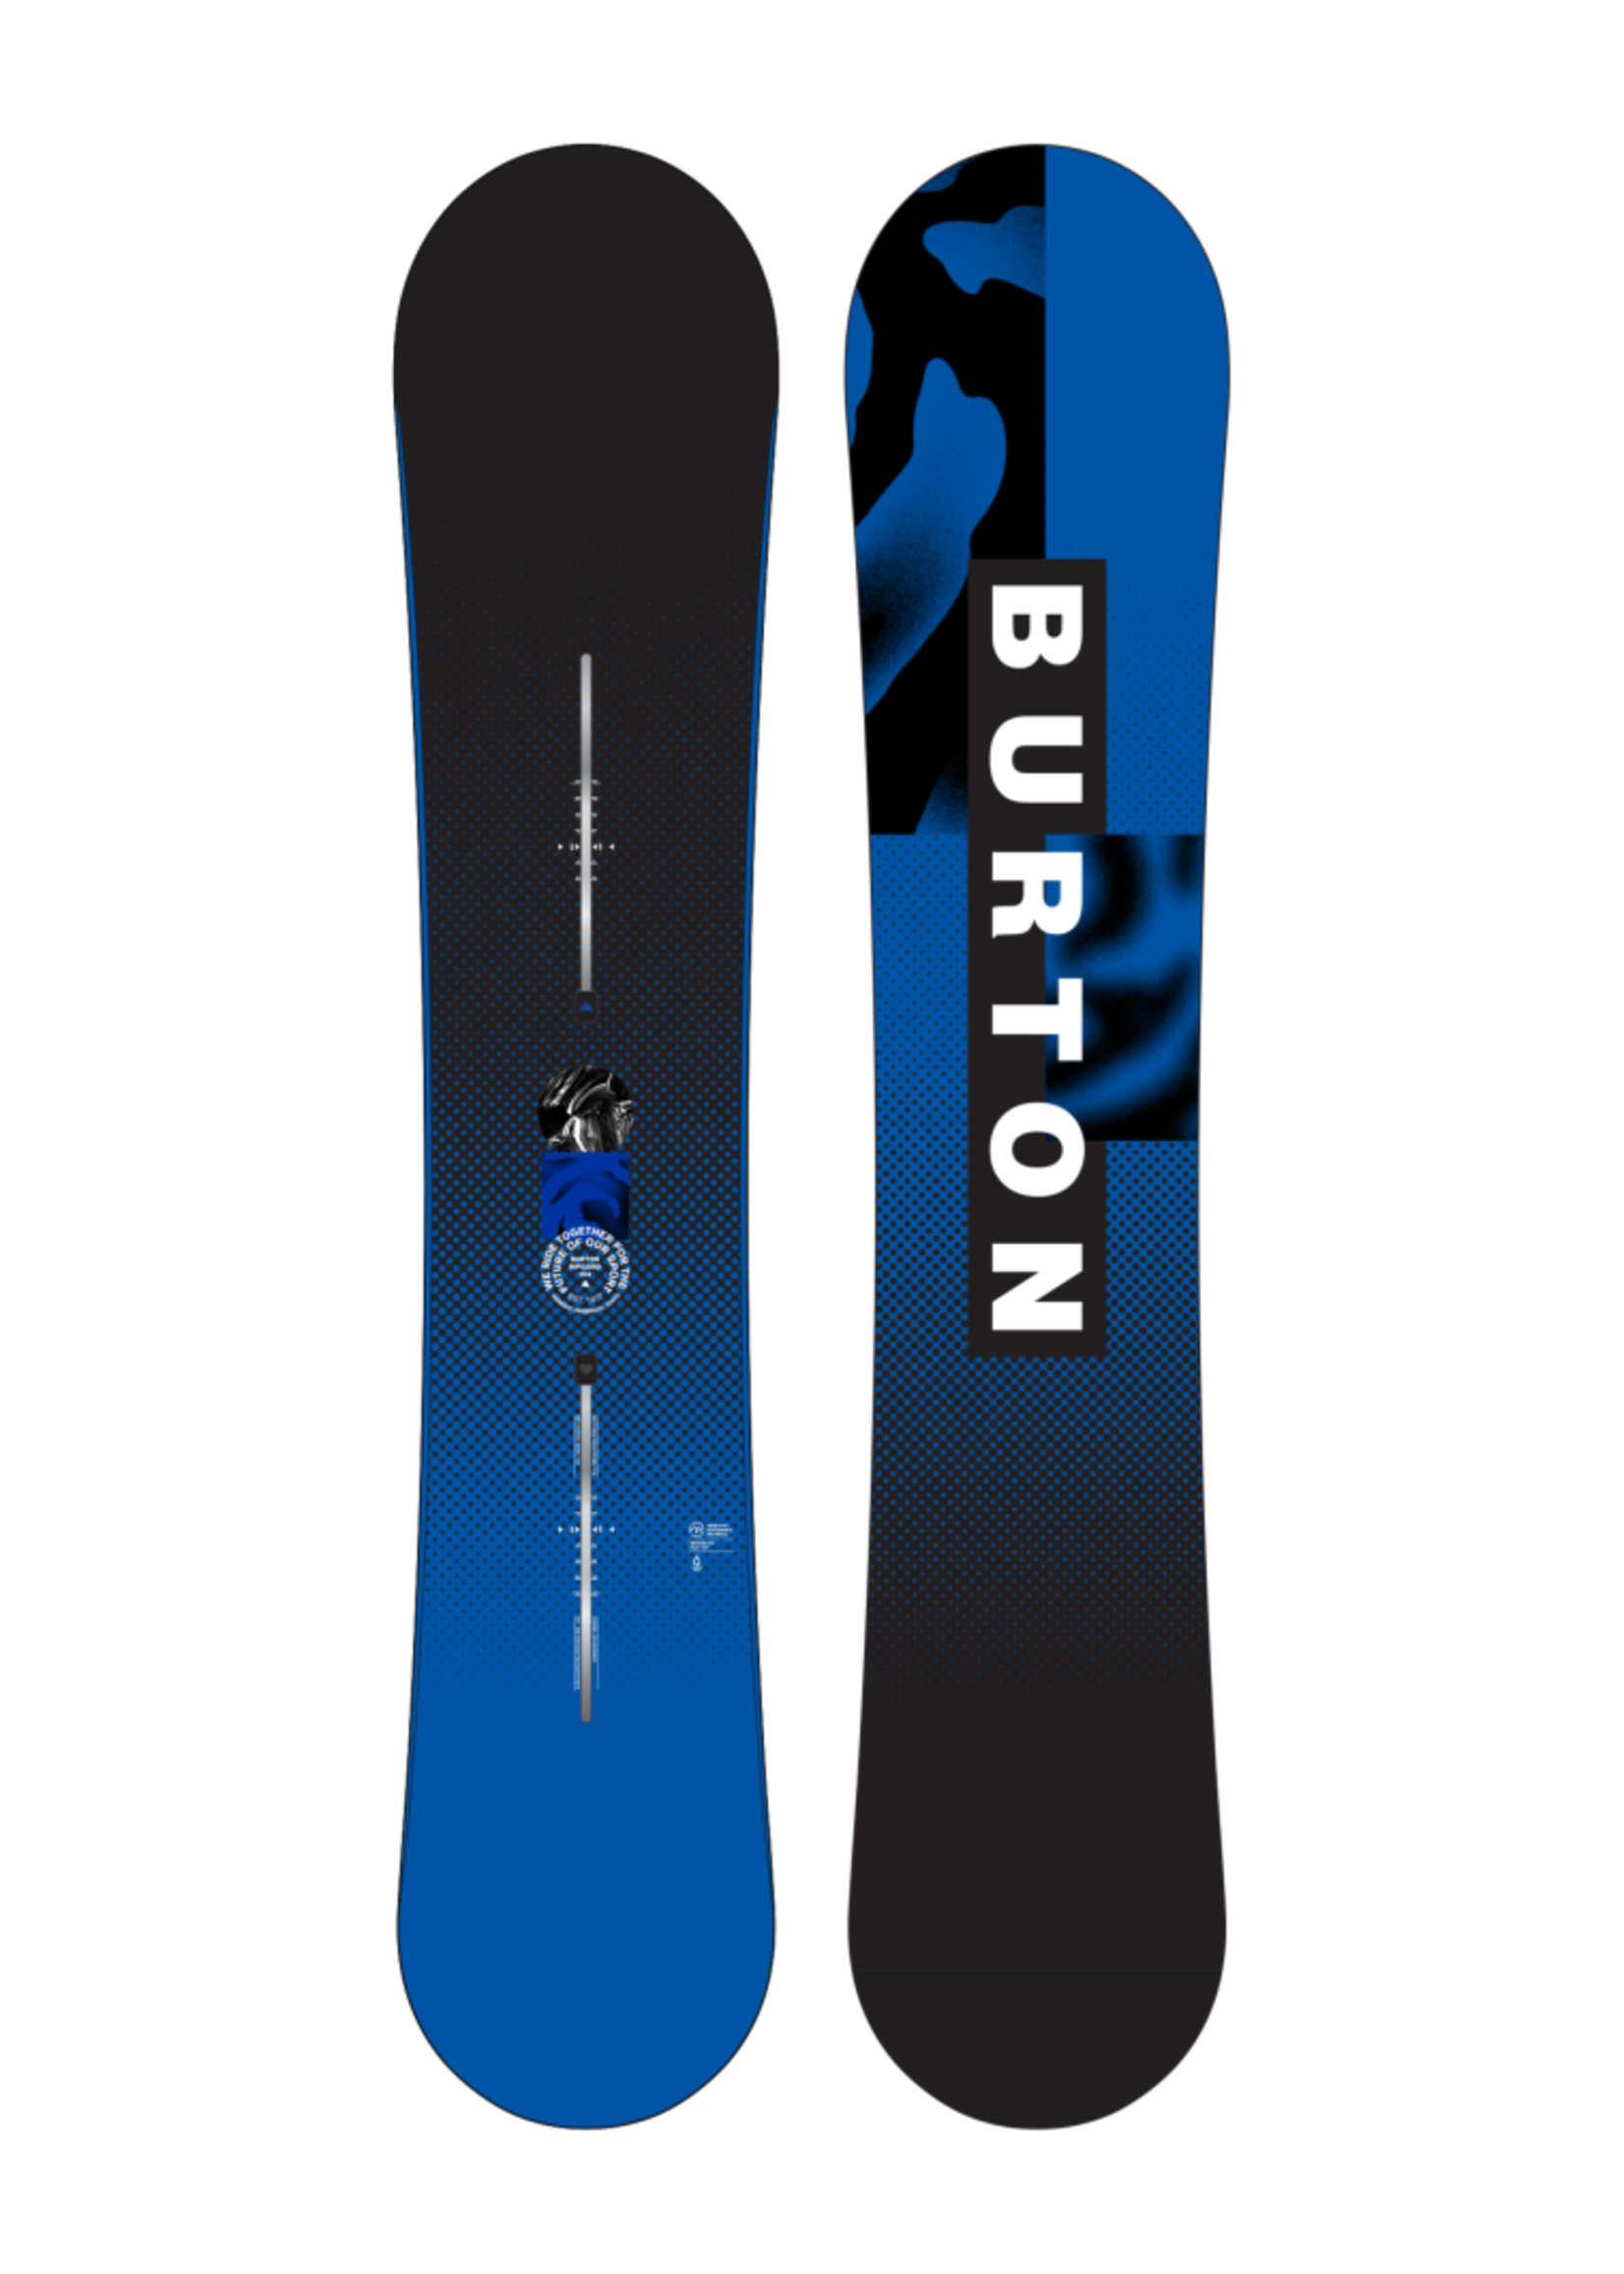 Burton Men's Ripcord Snowboard